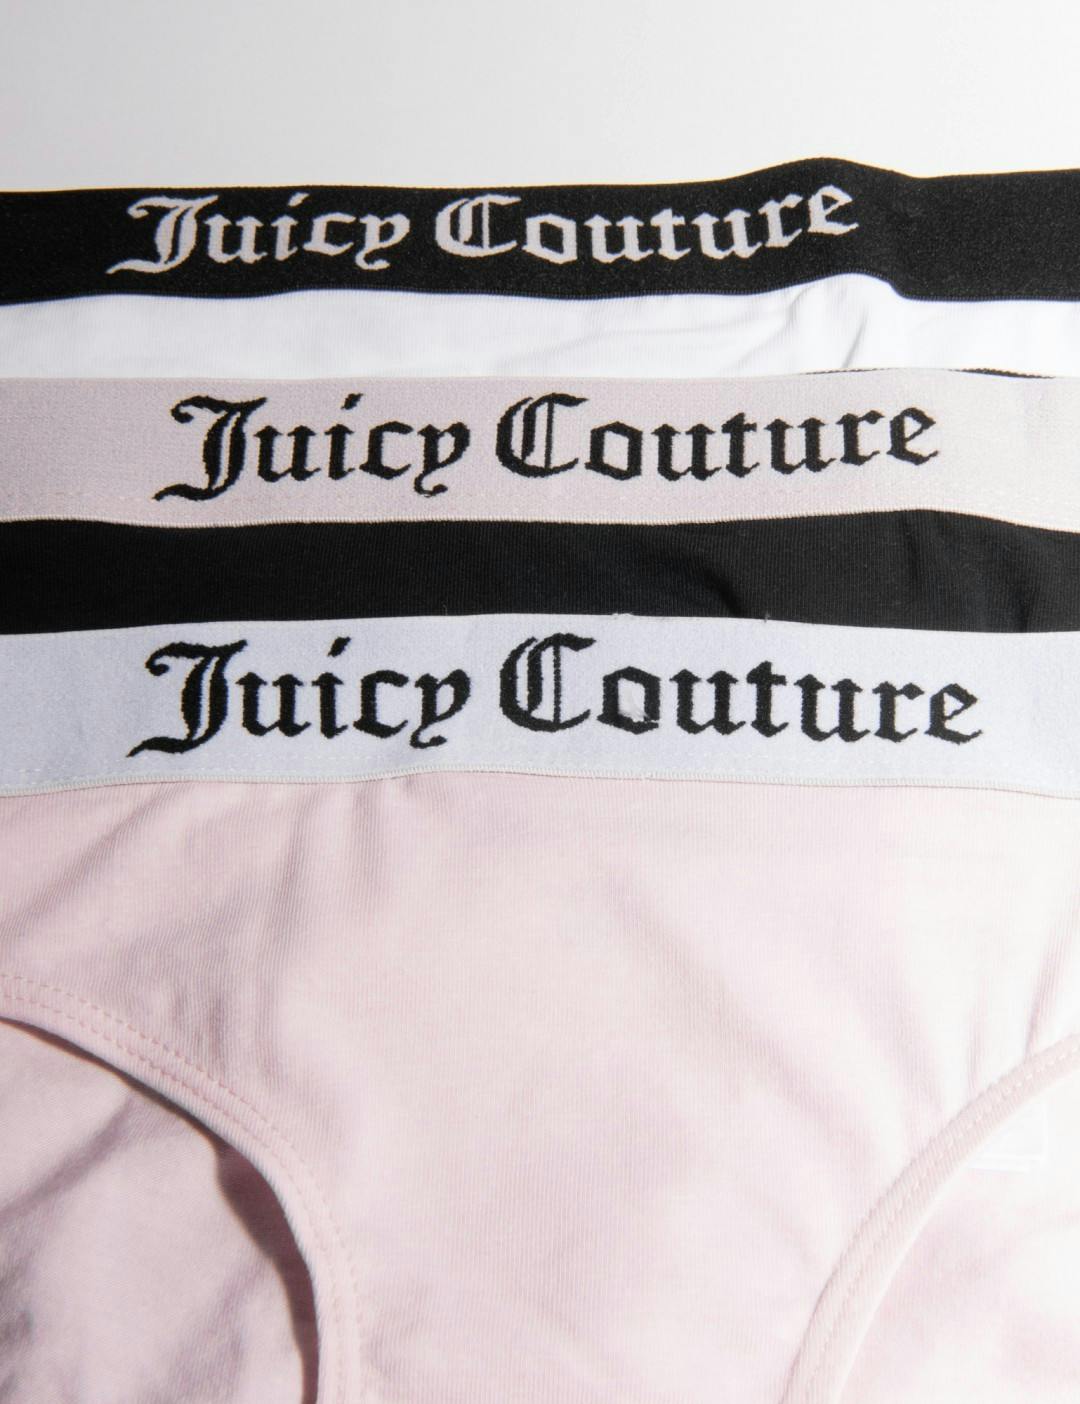 Juicy Couture Juicy Couture Briefs 3pk Hanging - Underwear 